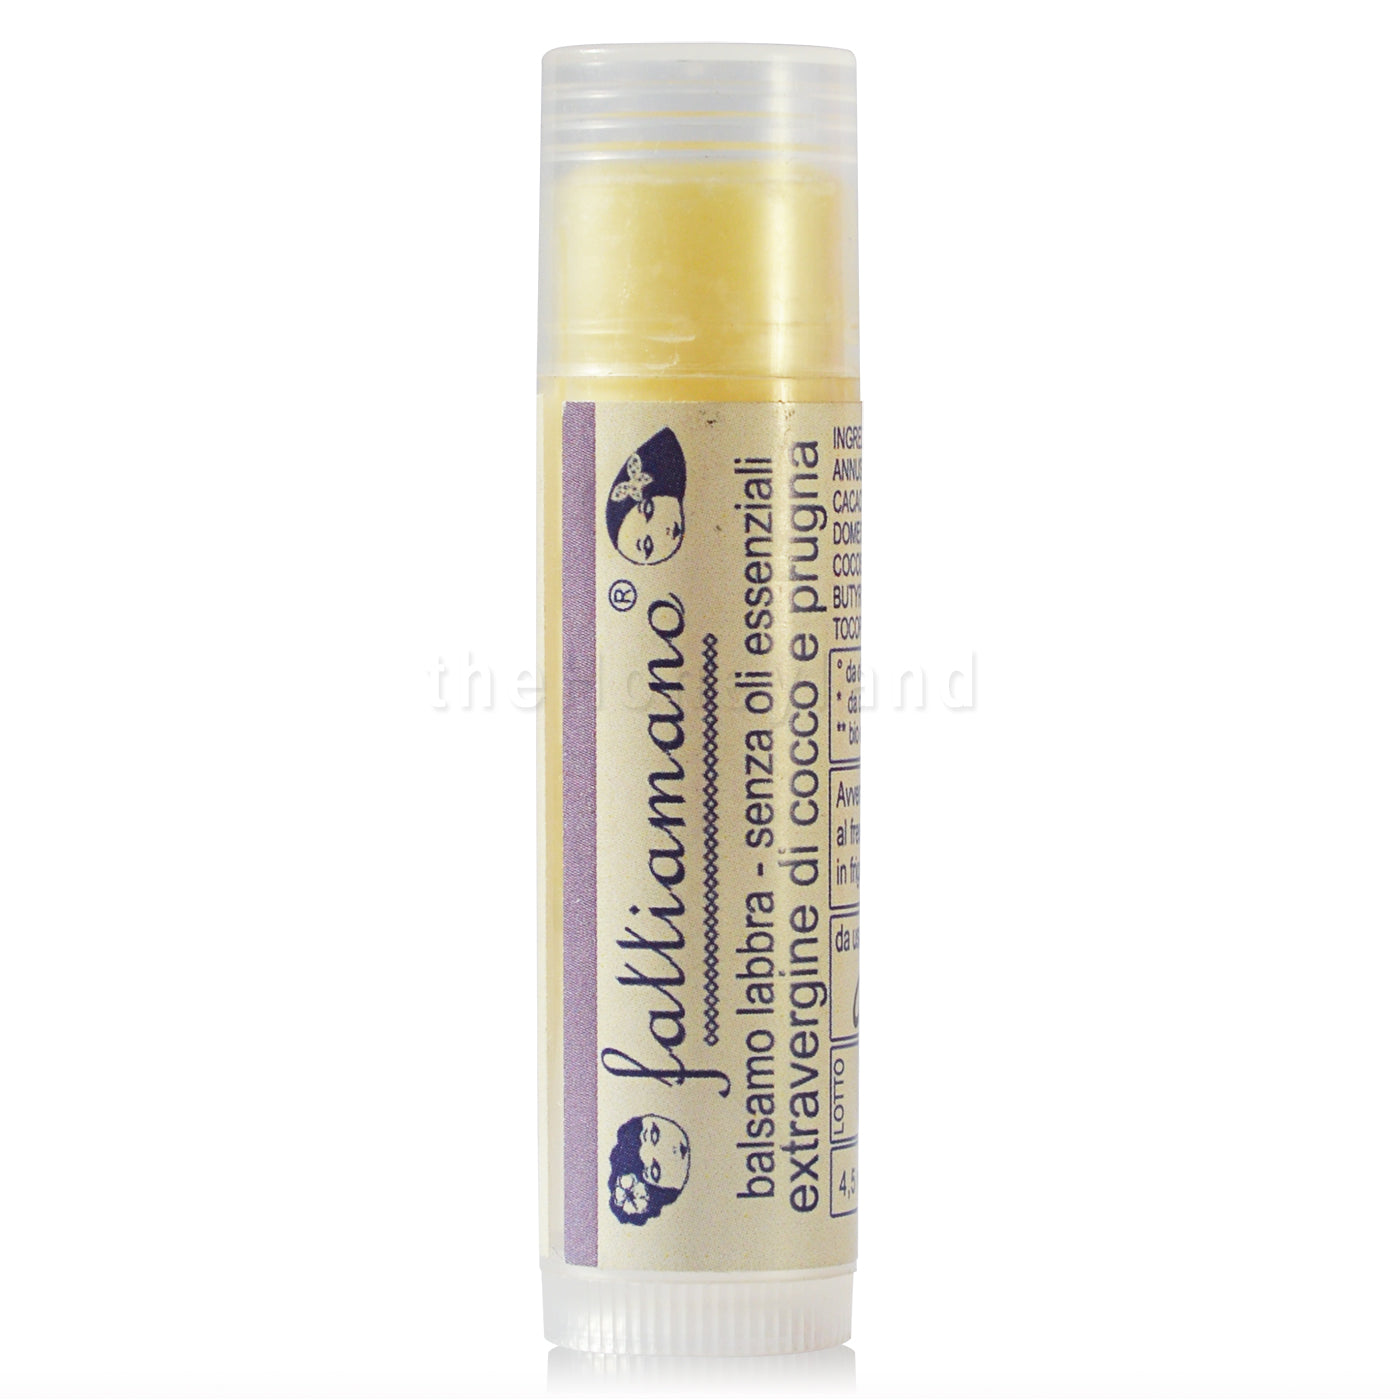 Fragrance-free lip balm with organic beeswax